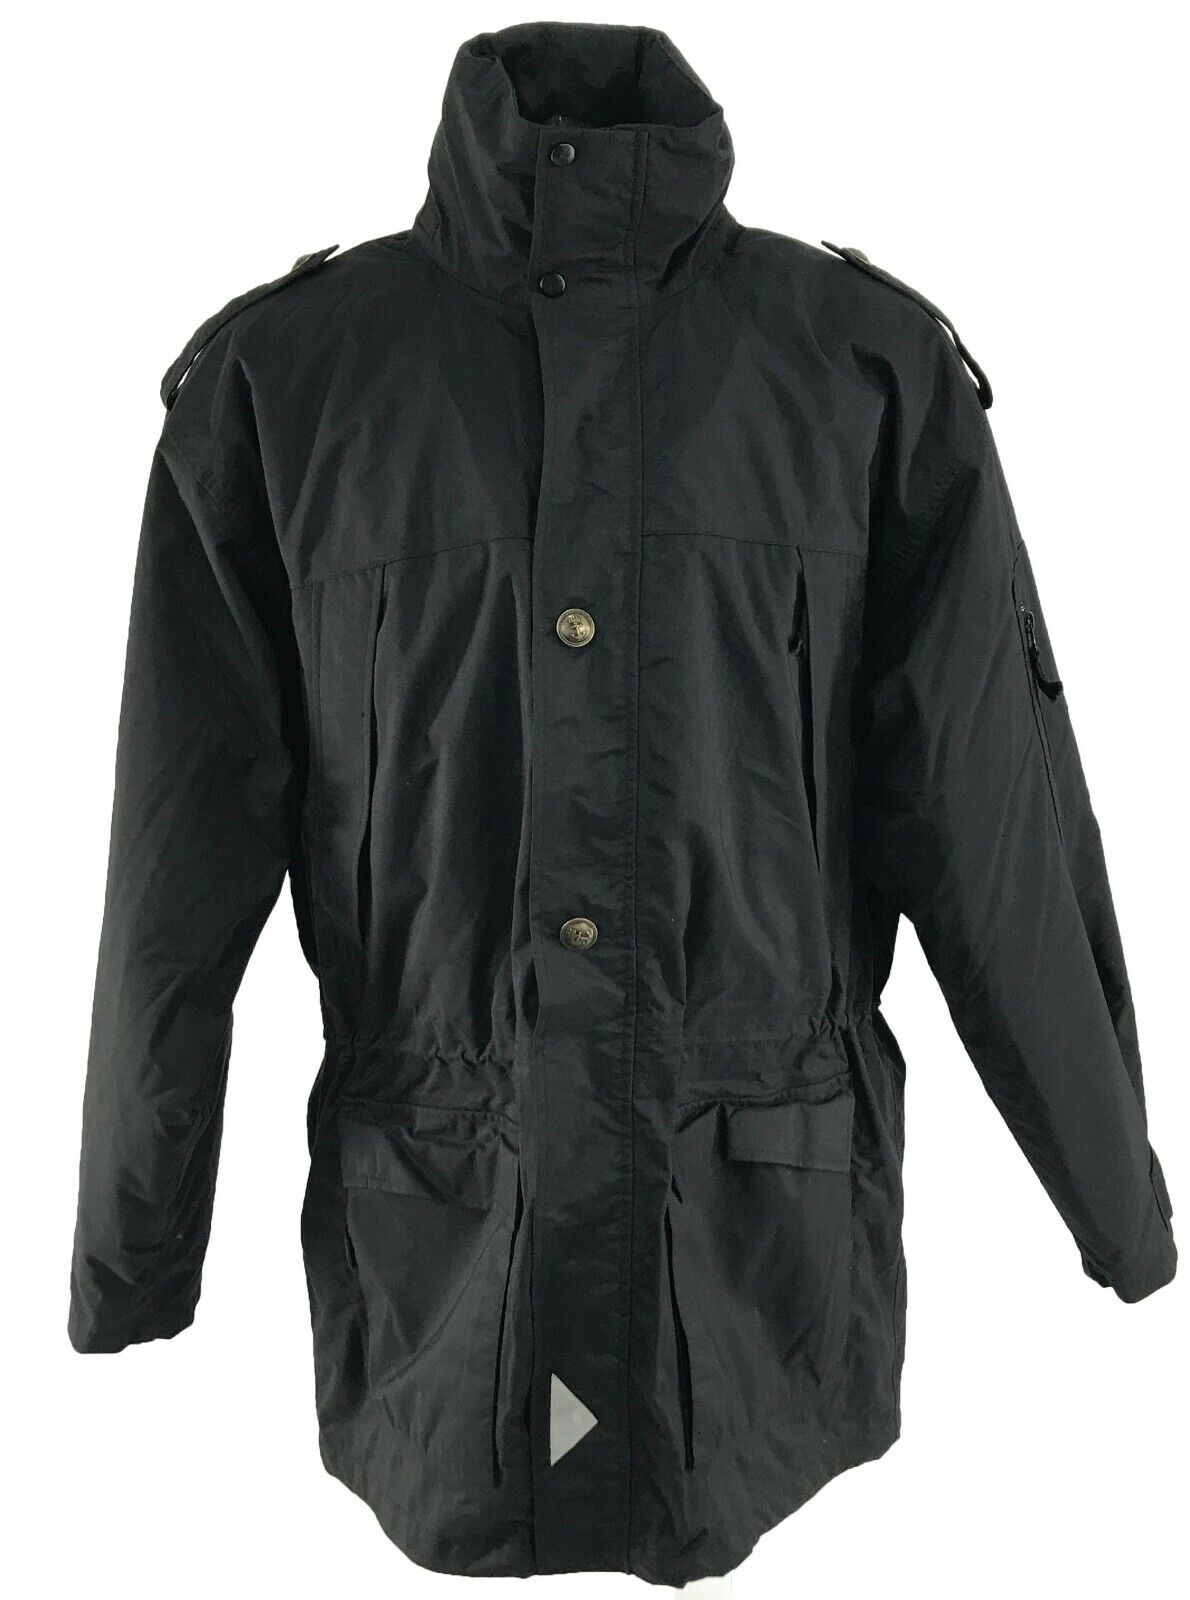 Norwegian military rainproof insulated jacket - storm jacket, size LARGE (A)